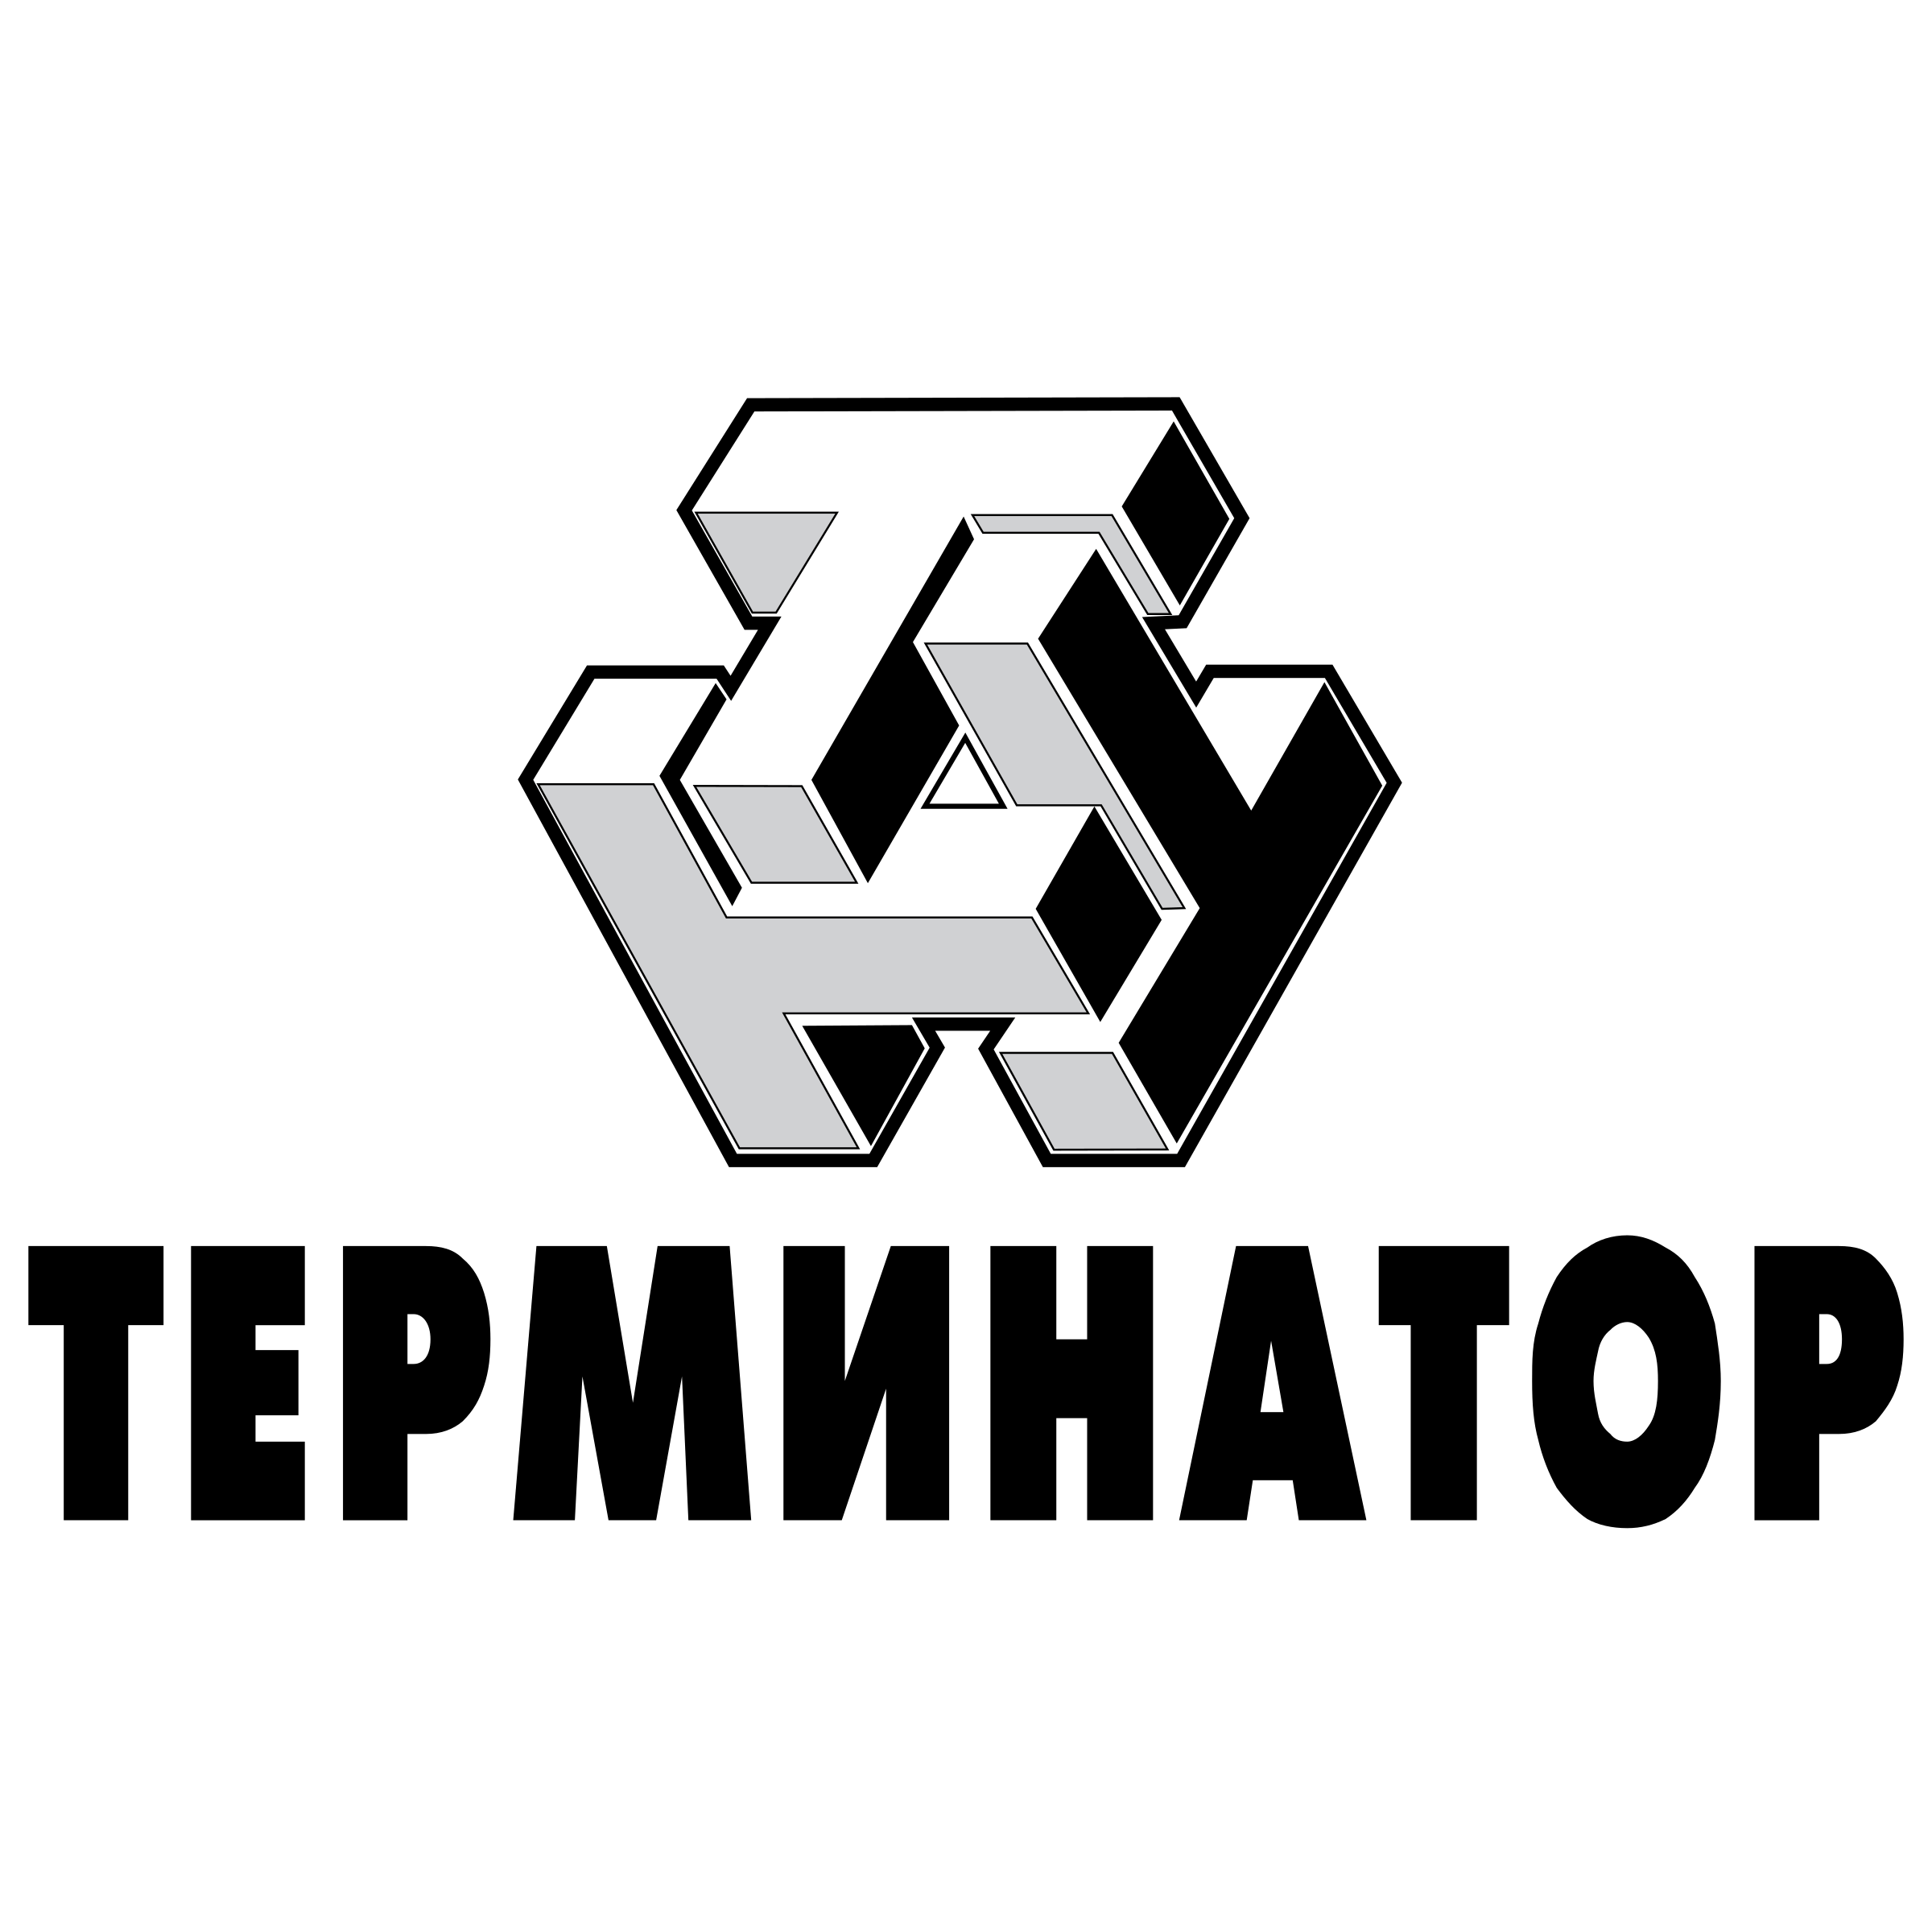 Terminator Logo - Terminator Logo PNG Transparent & SVG Vector